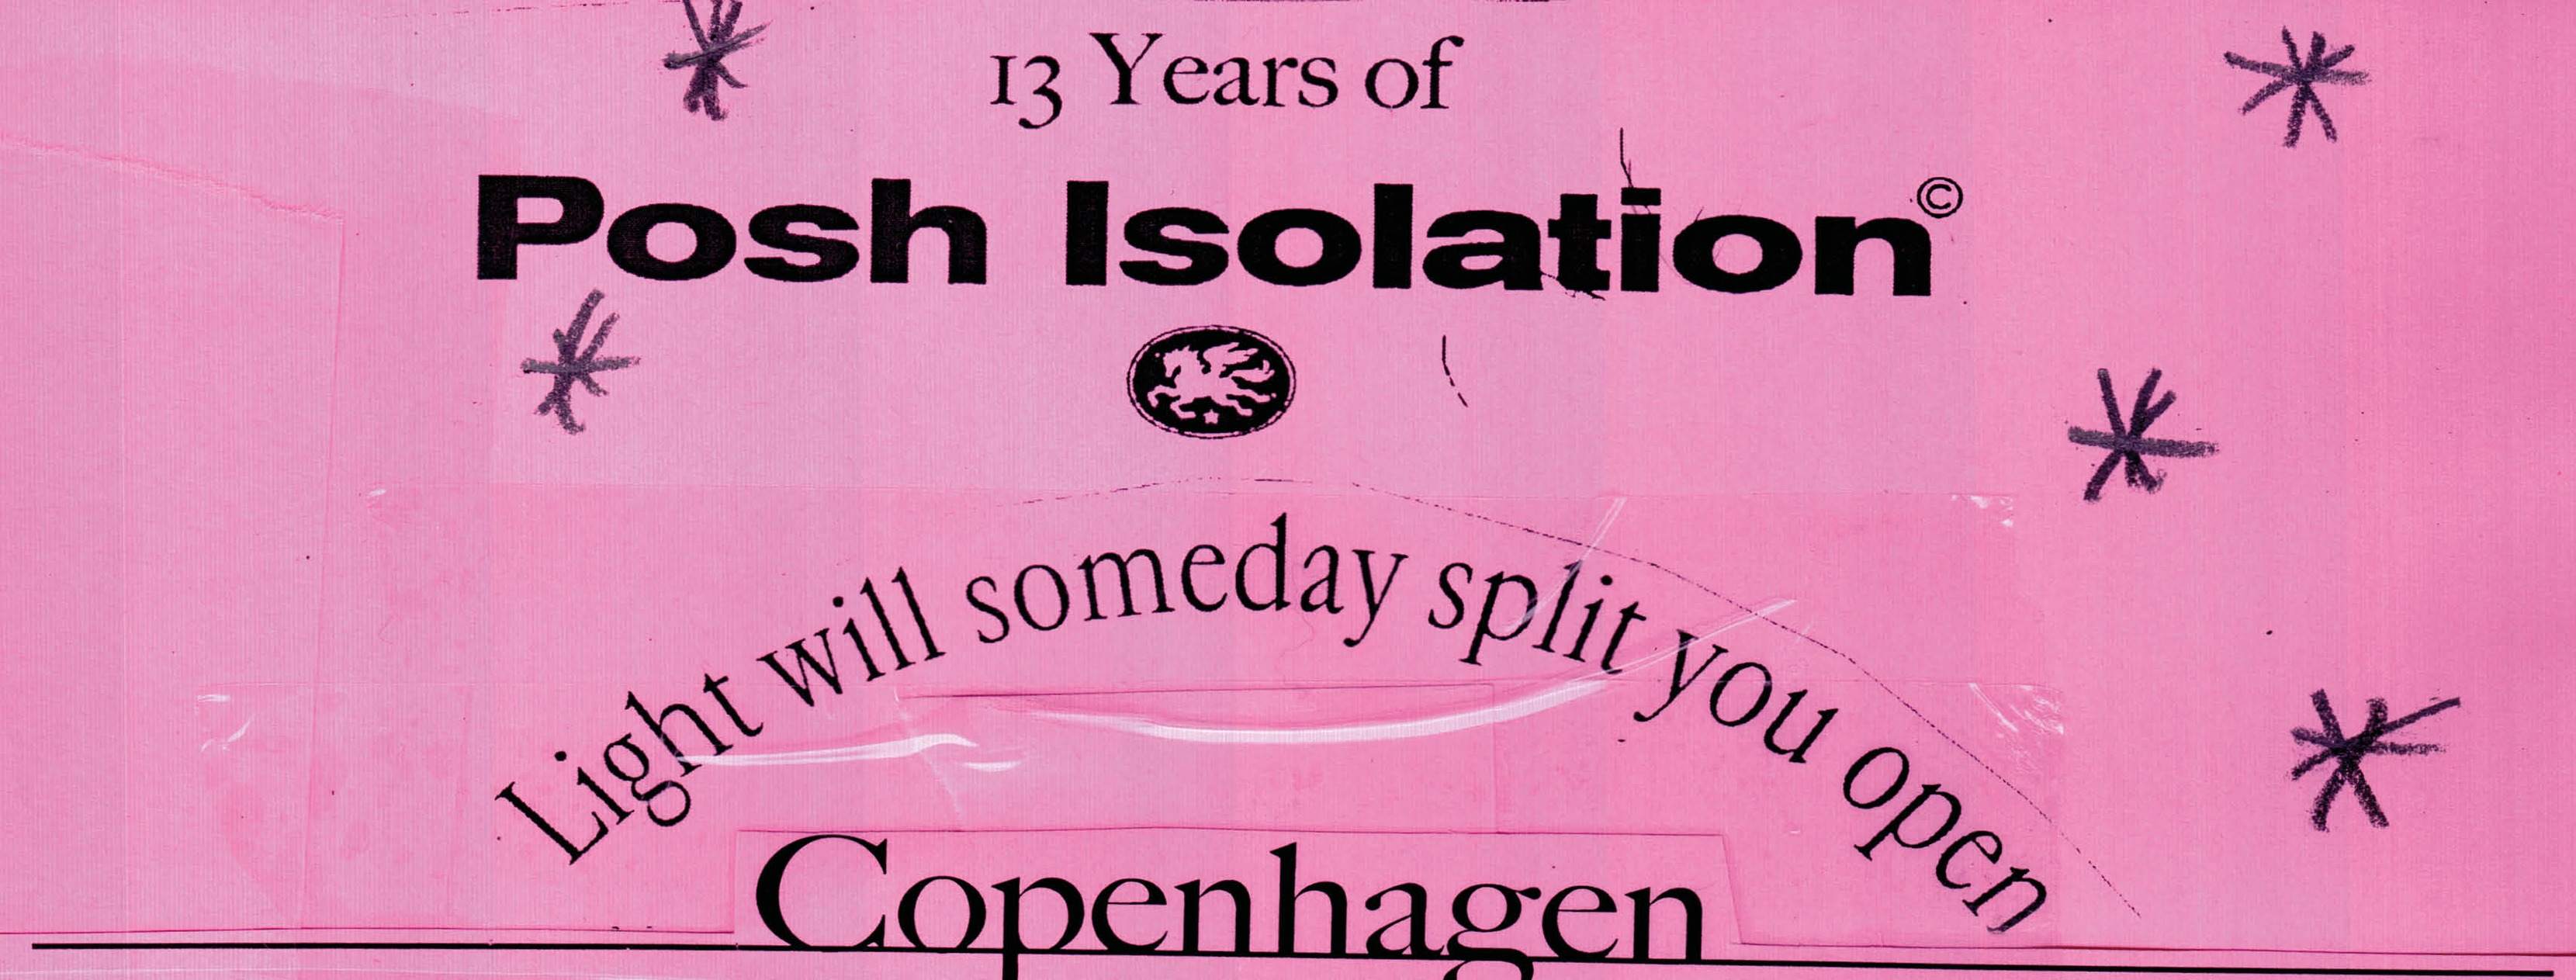 13 Years of Posh Isolation - フライヤー表